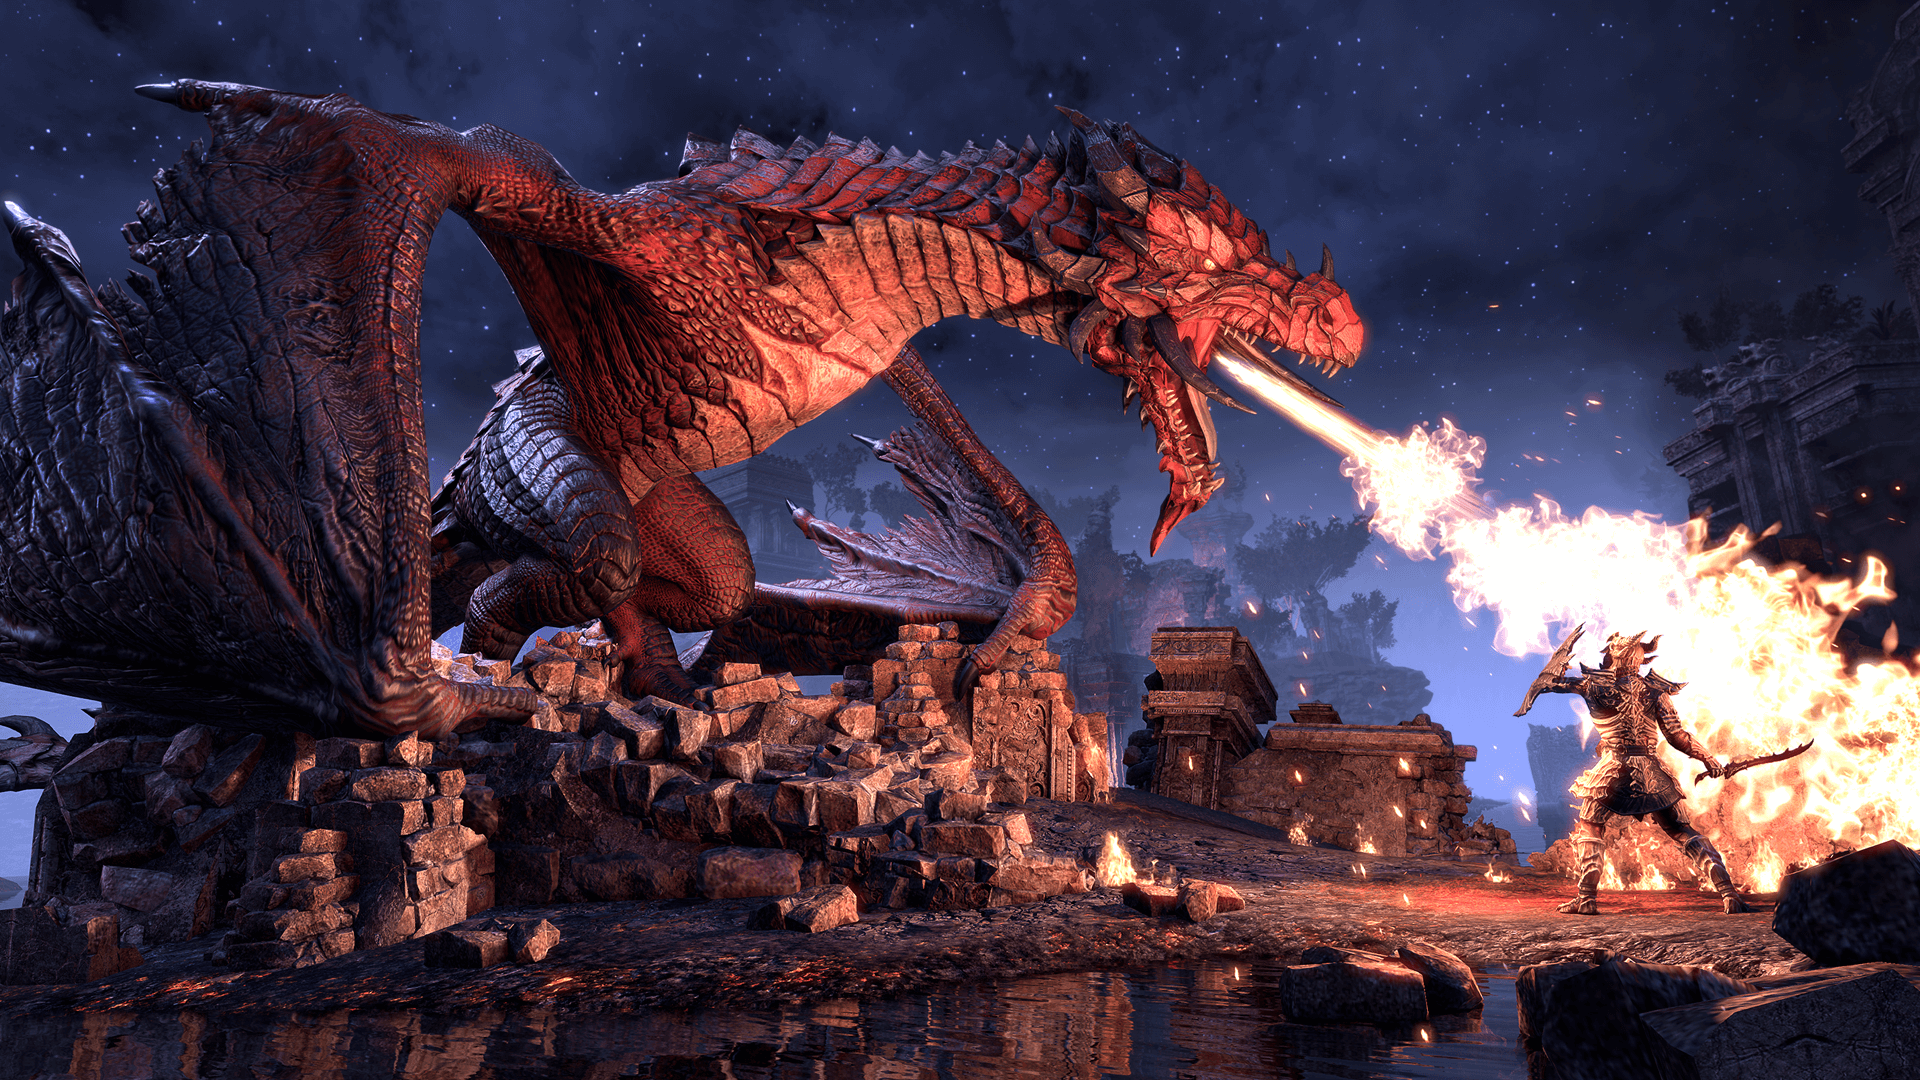 The Elder Scrolls Online: Elsweyr finalmente trará os dragões para